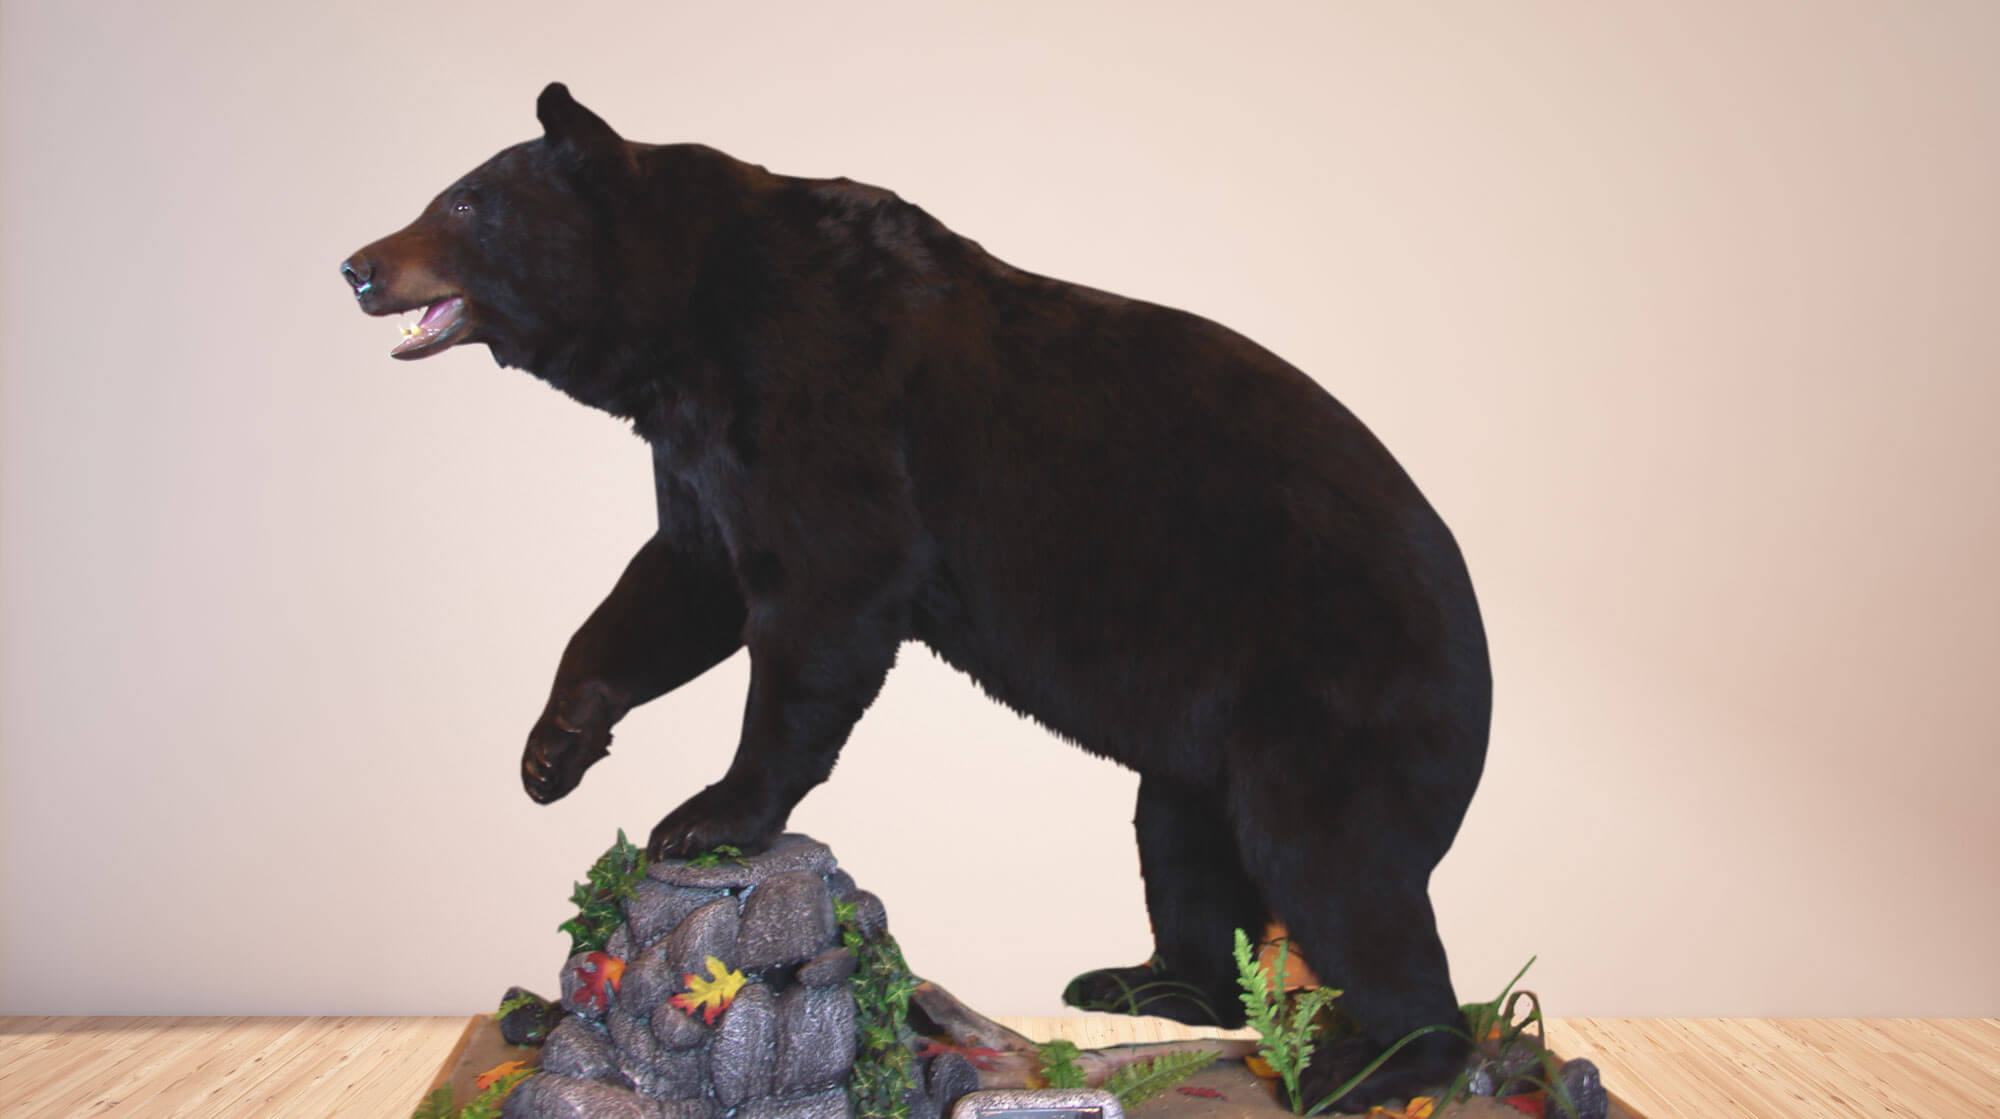 Life size mount of a black bear